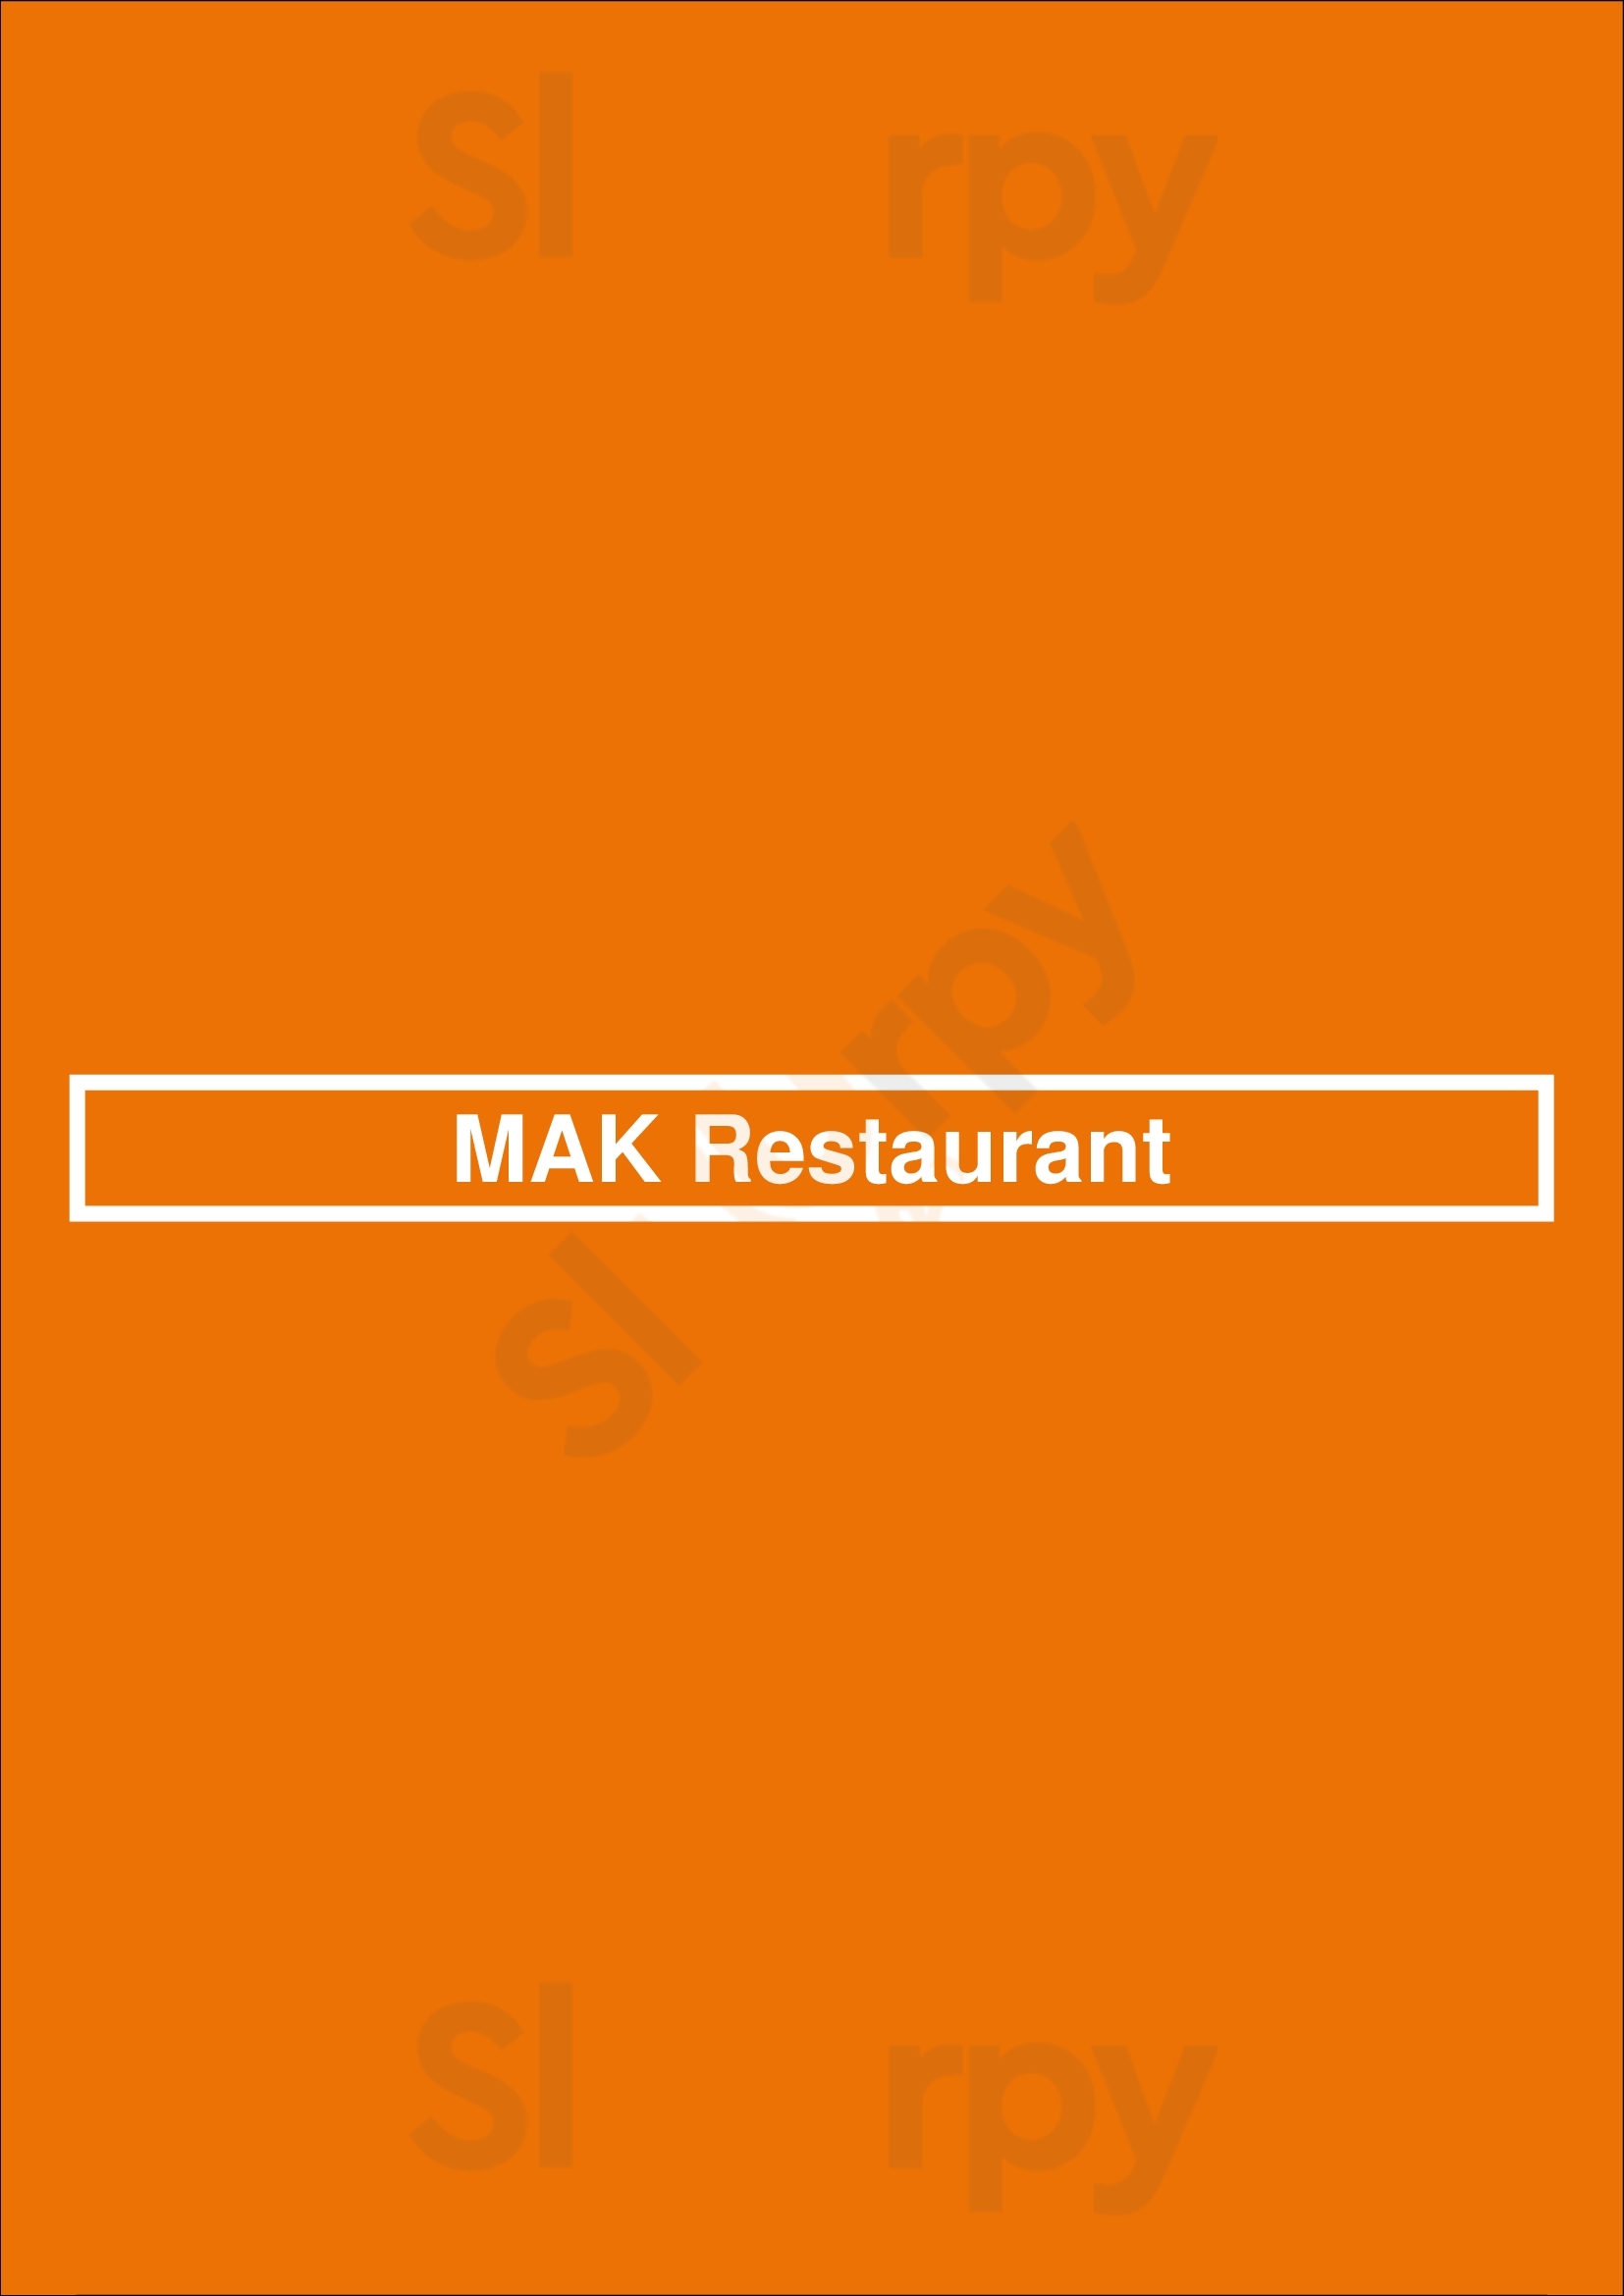 Mak Restaurant Chicago Menu - 1